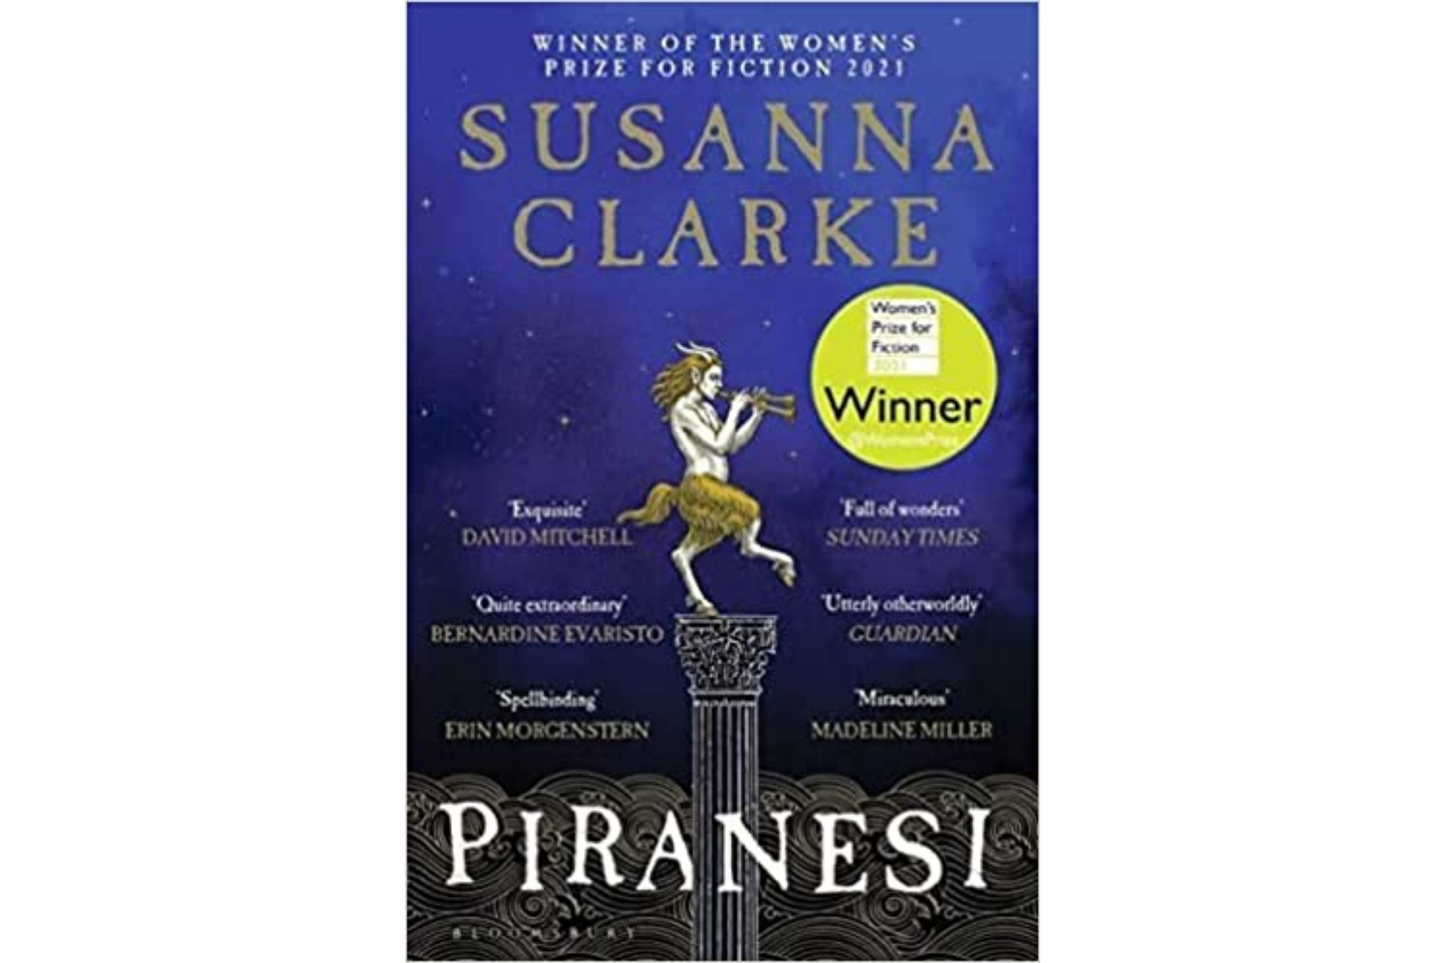 Piranesi - Winner of the Women's Prize 2021 (Susanna Clarke)